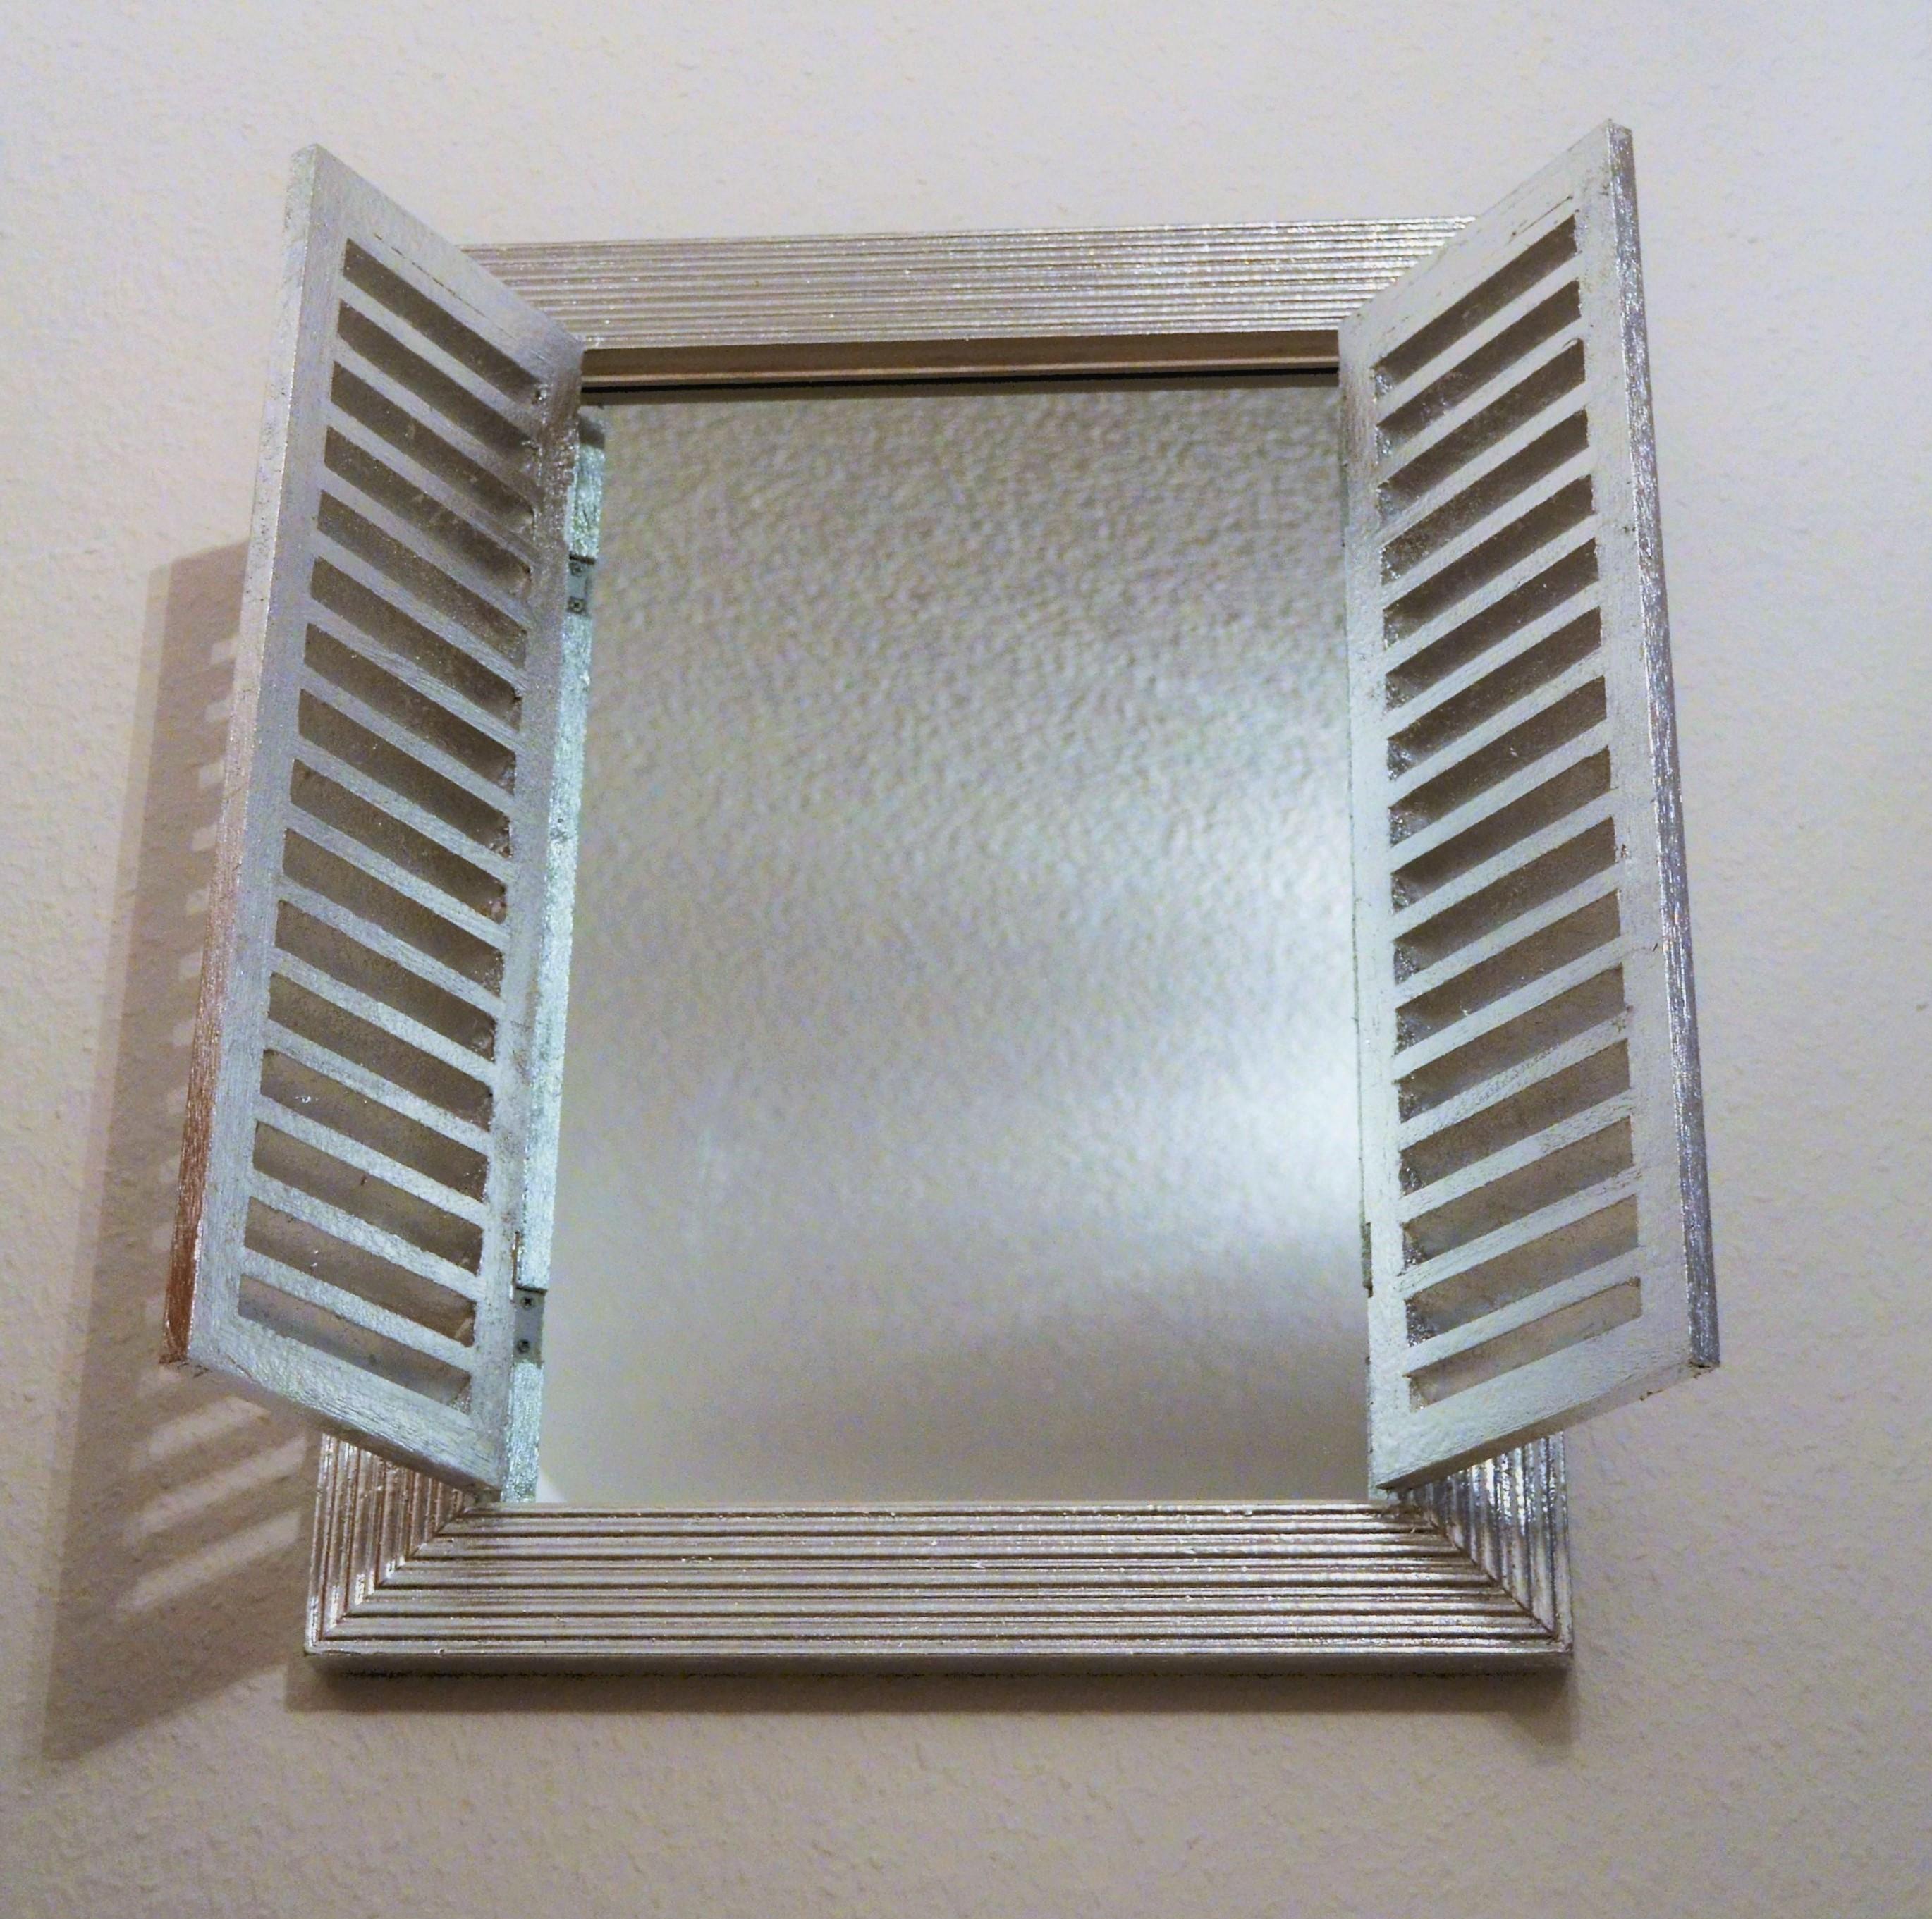 Dekorativer Spiegel, versilbert #spiegel #wandspiegel #wanddeko ©RPF_Design